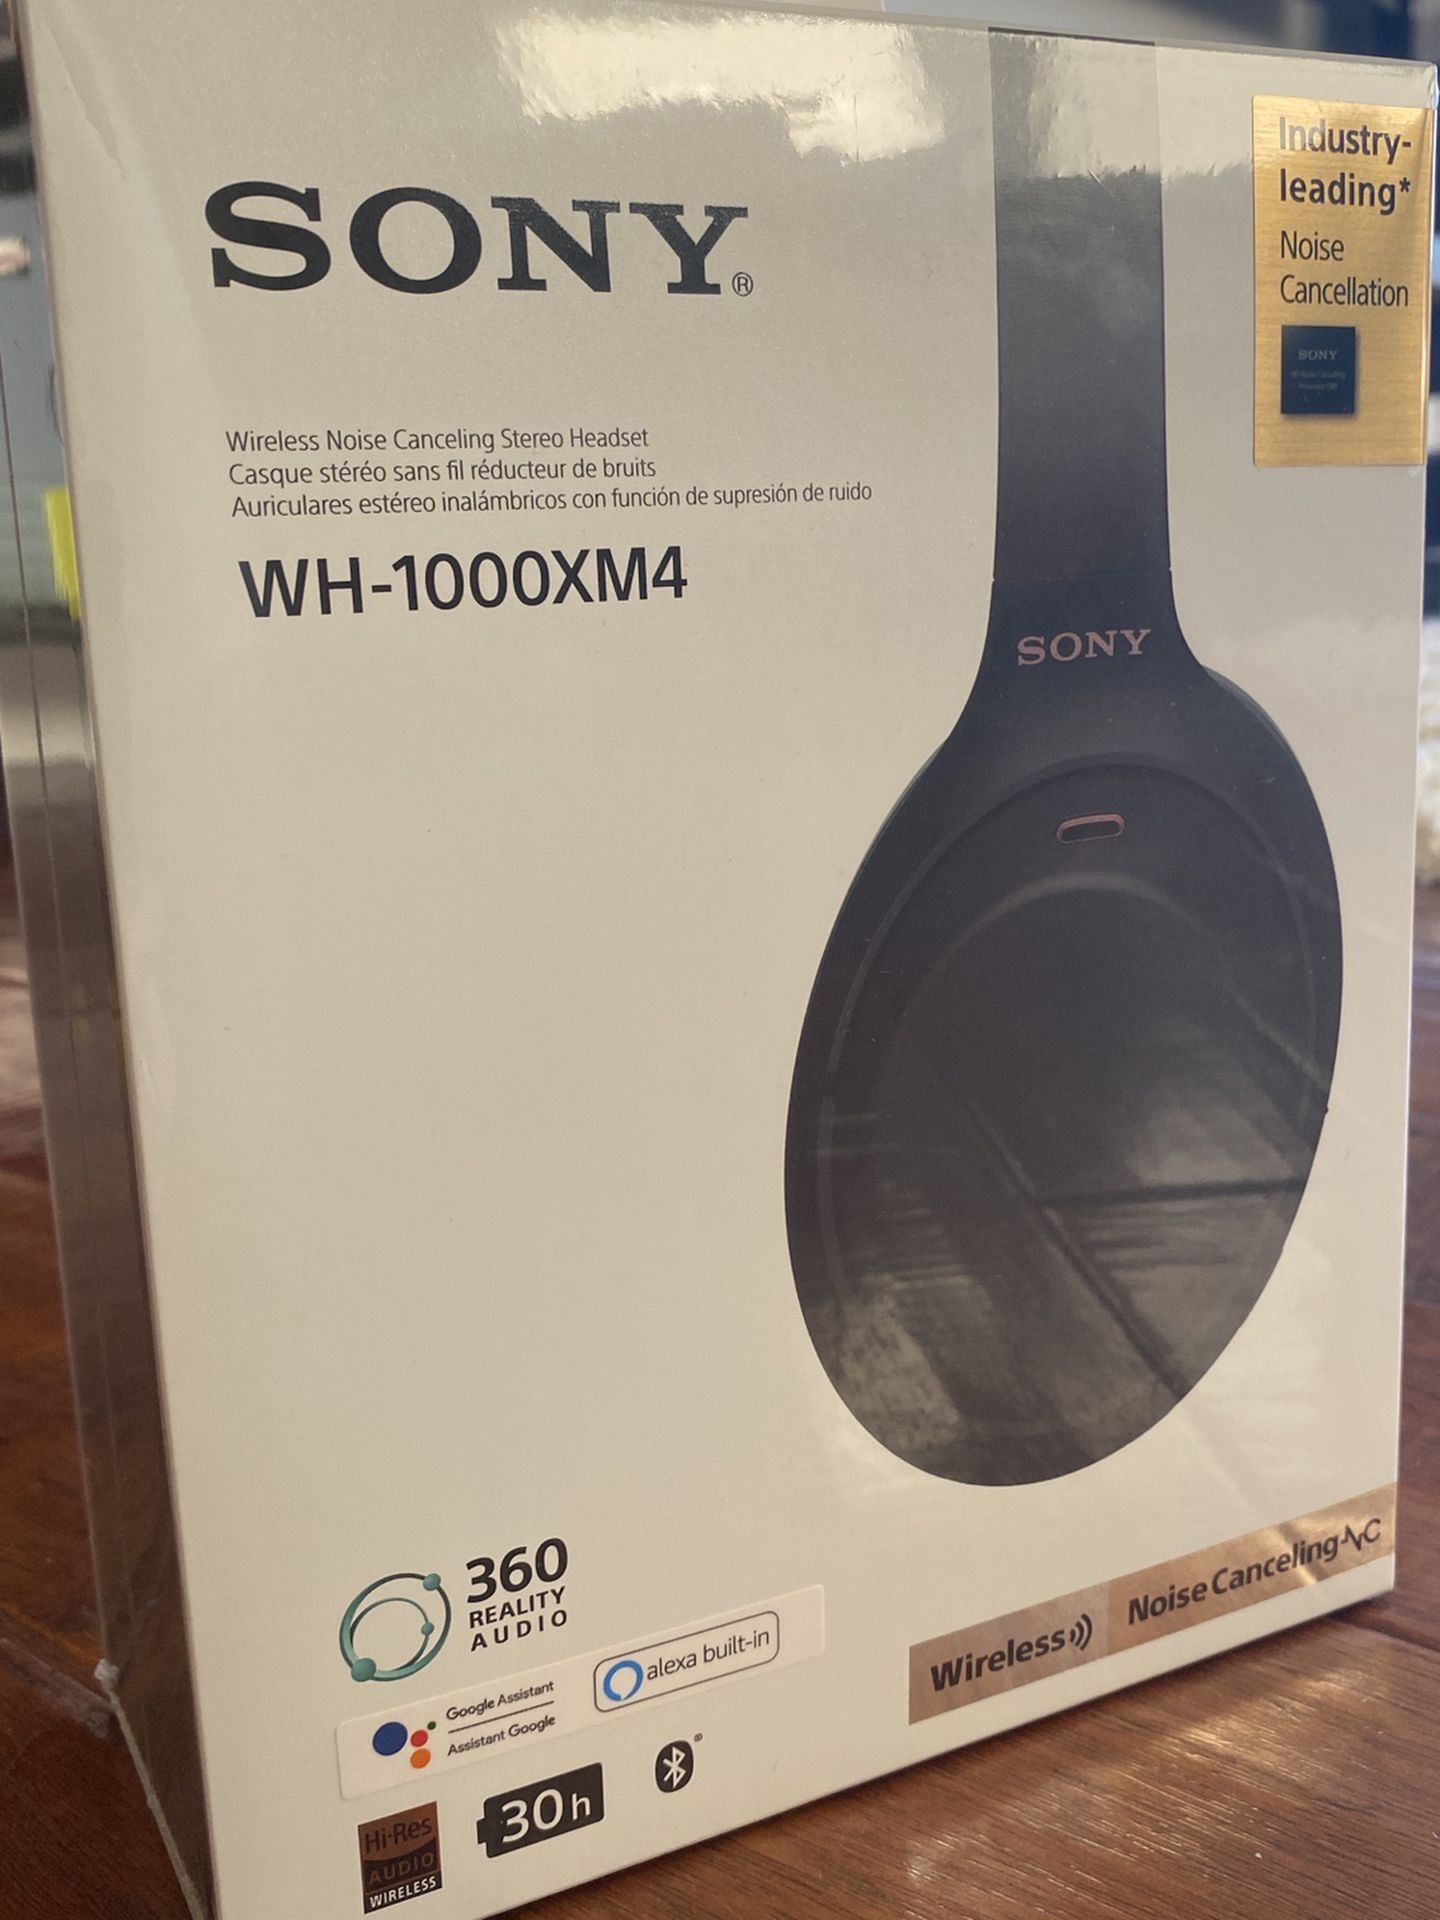 Sony WH-1000XM4 Wireless Noise Canceling Overhead Headphones - Brand New